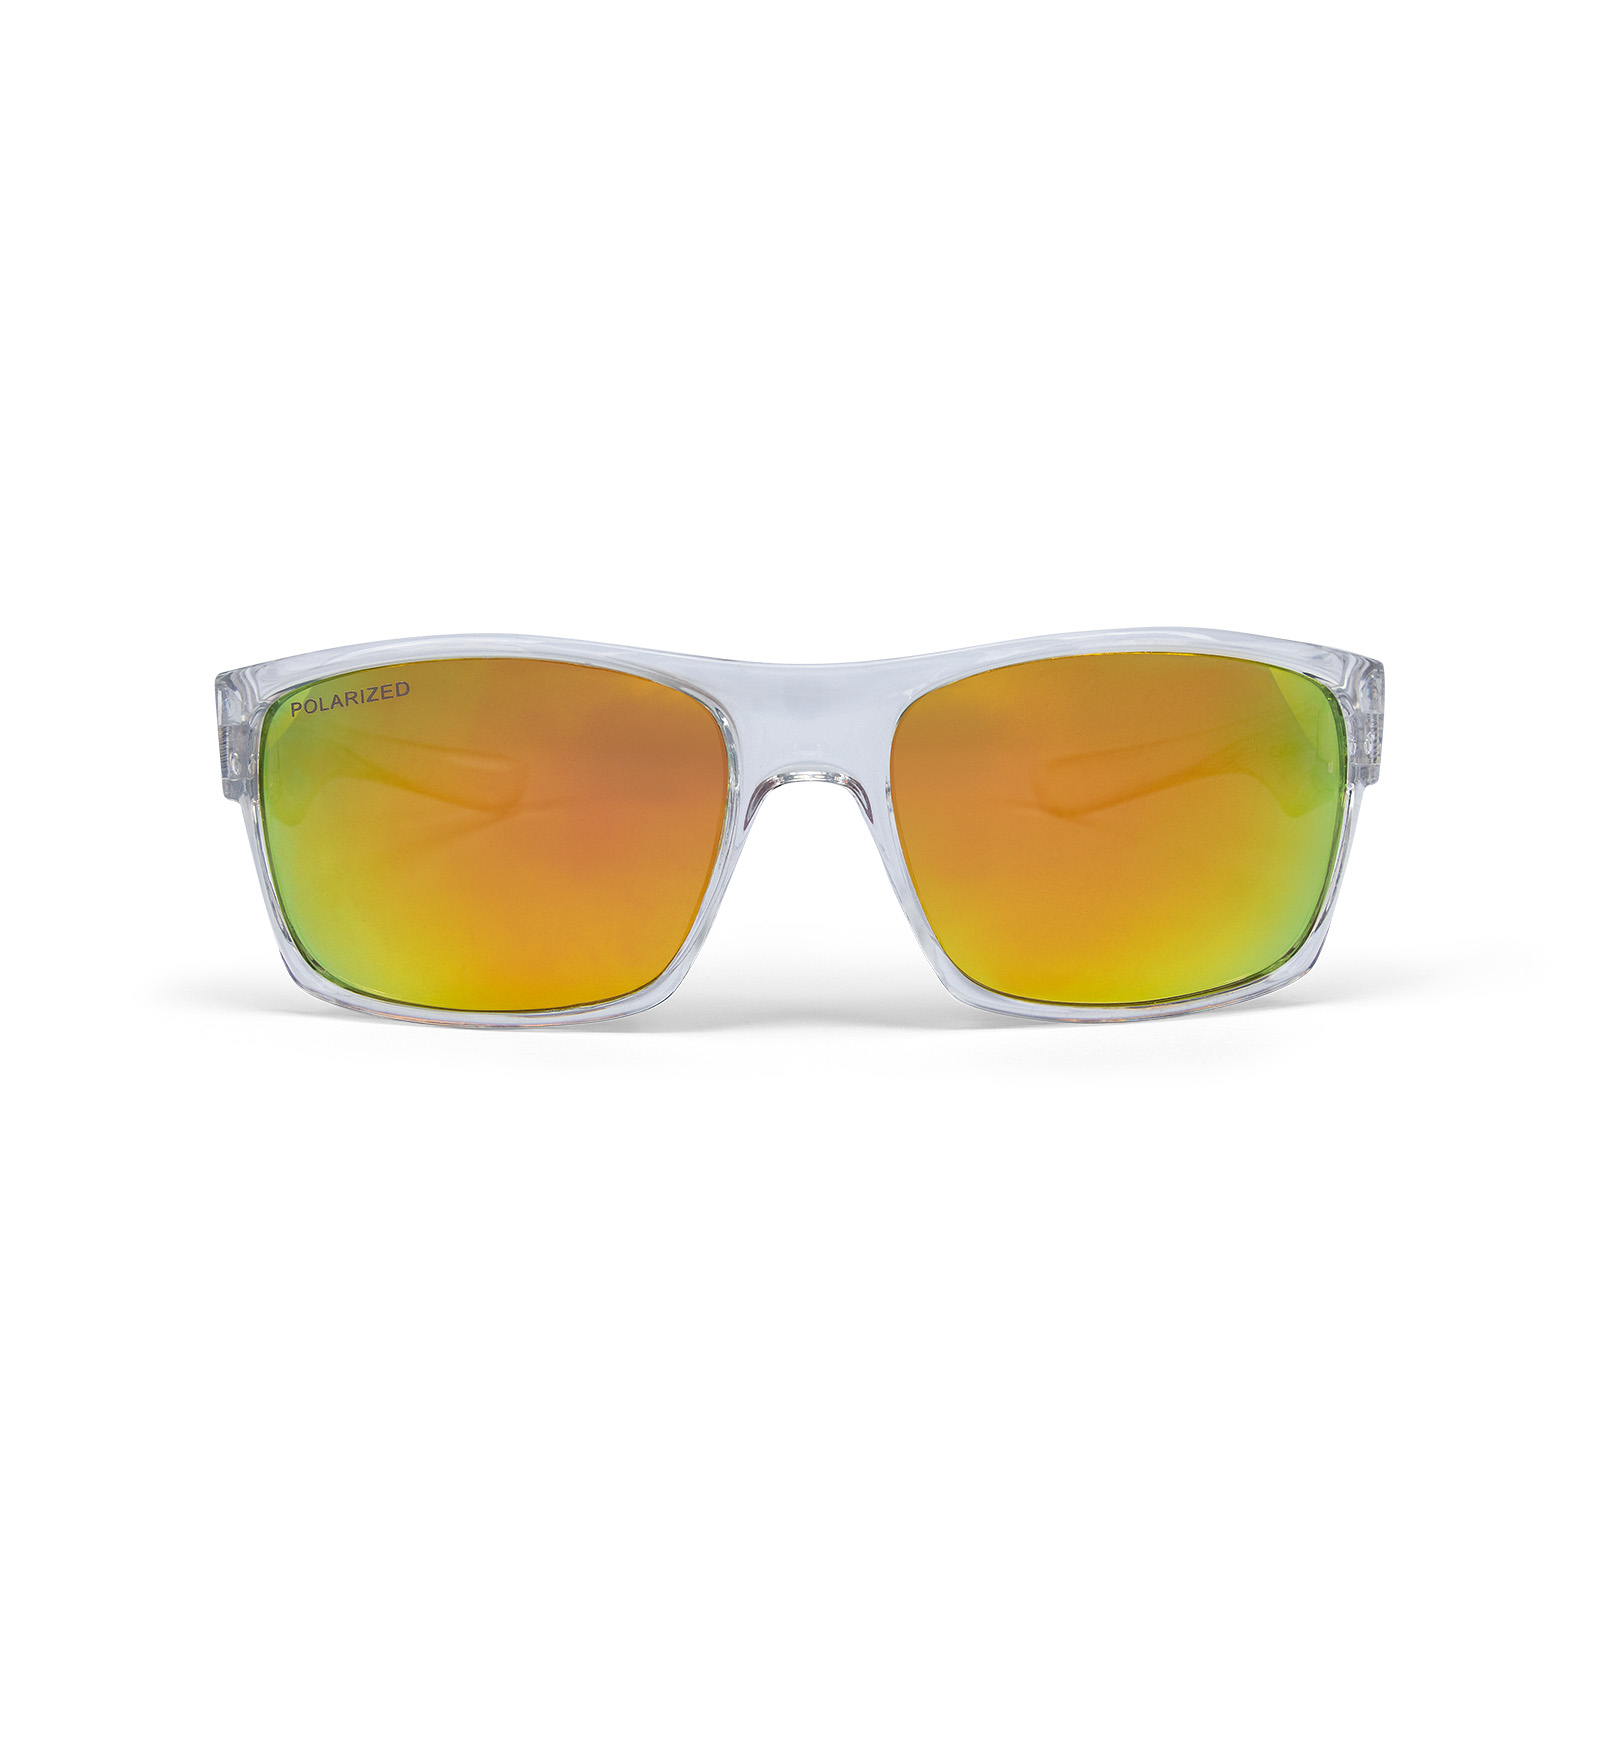 FEISHINI Brand Design Clear Sunglasses Men Polarized Driver Shades